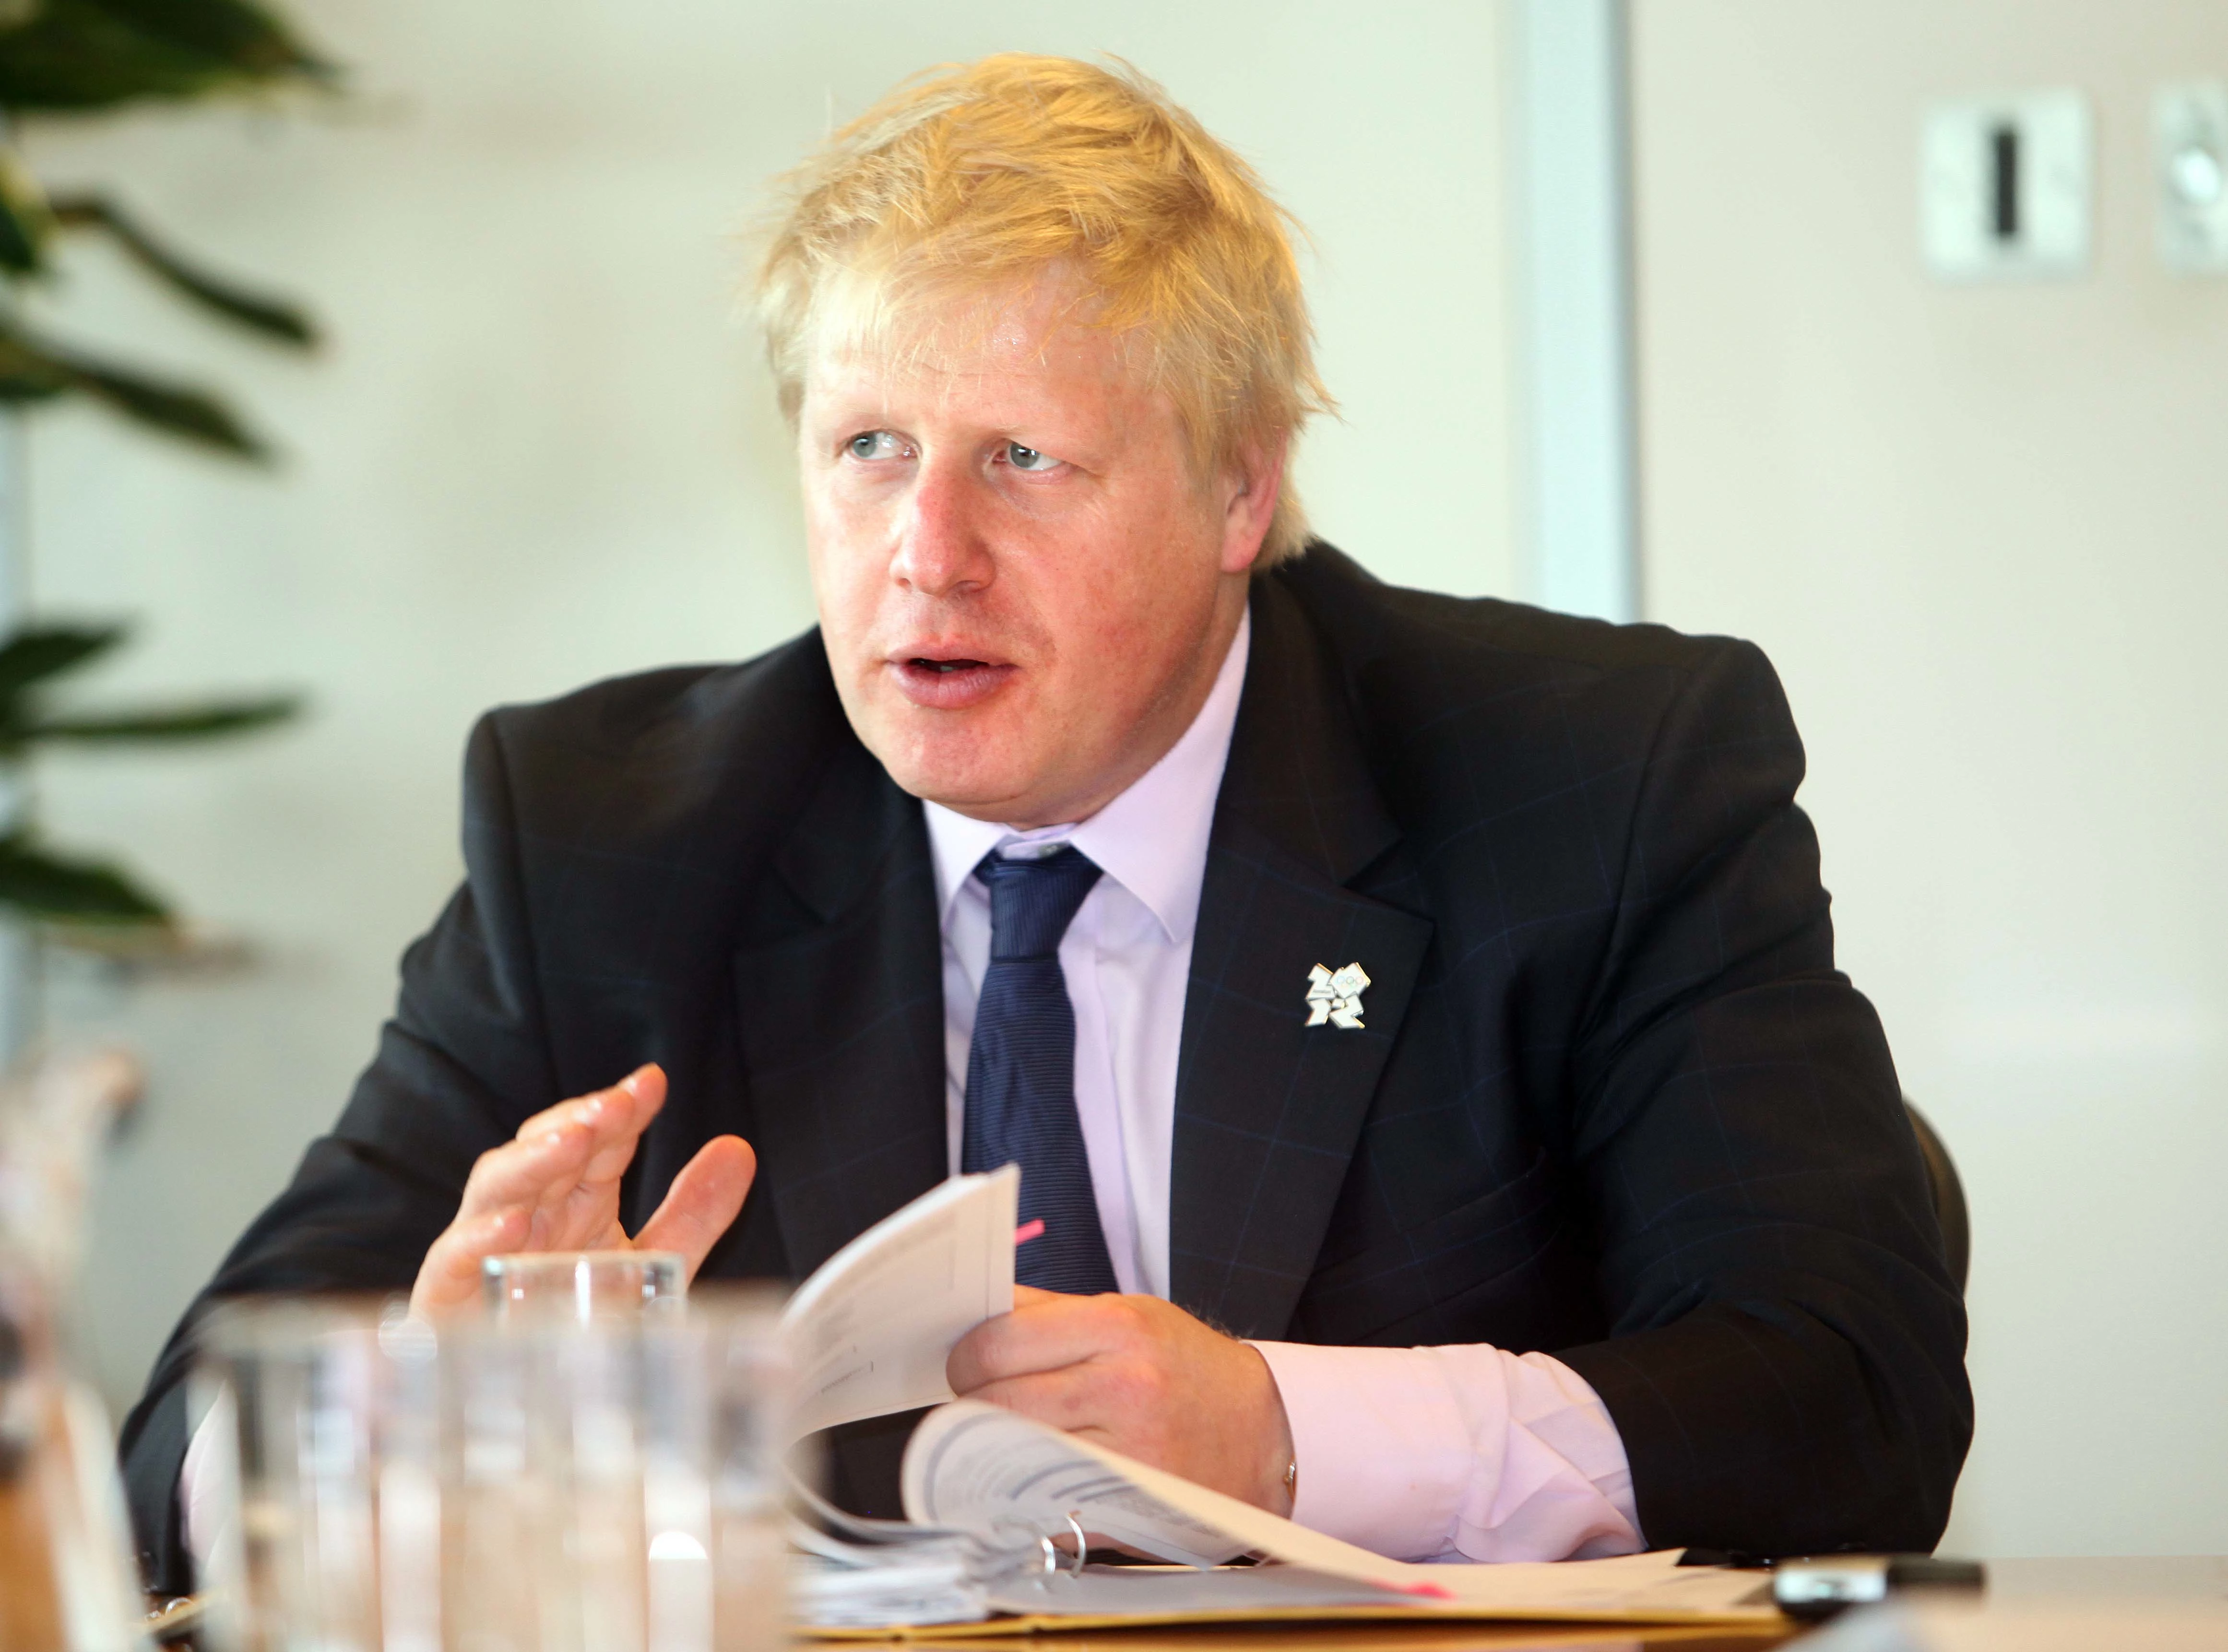 Boris Johnson chairing meeting